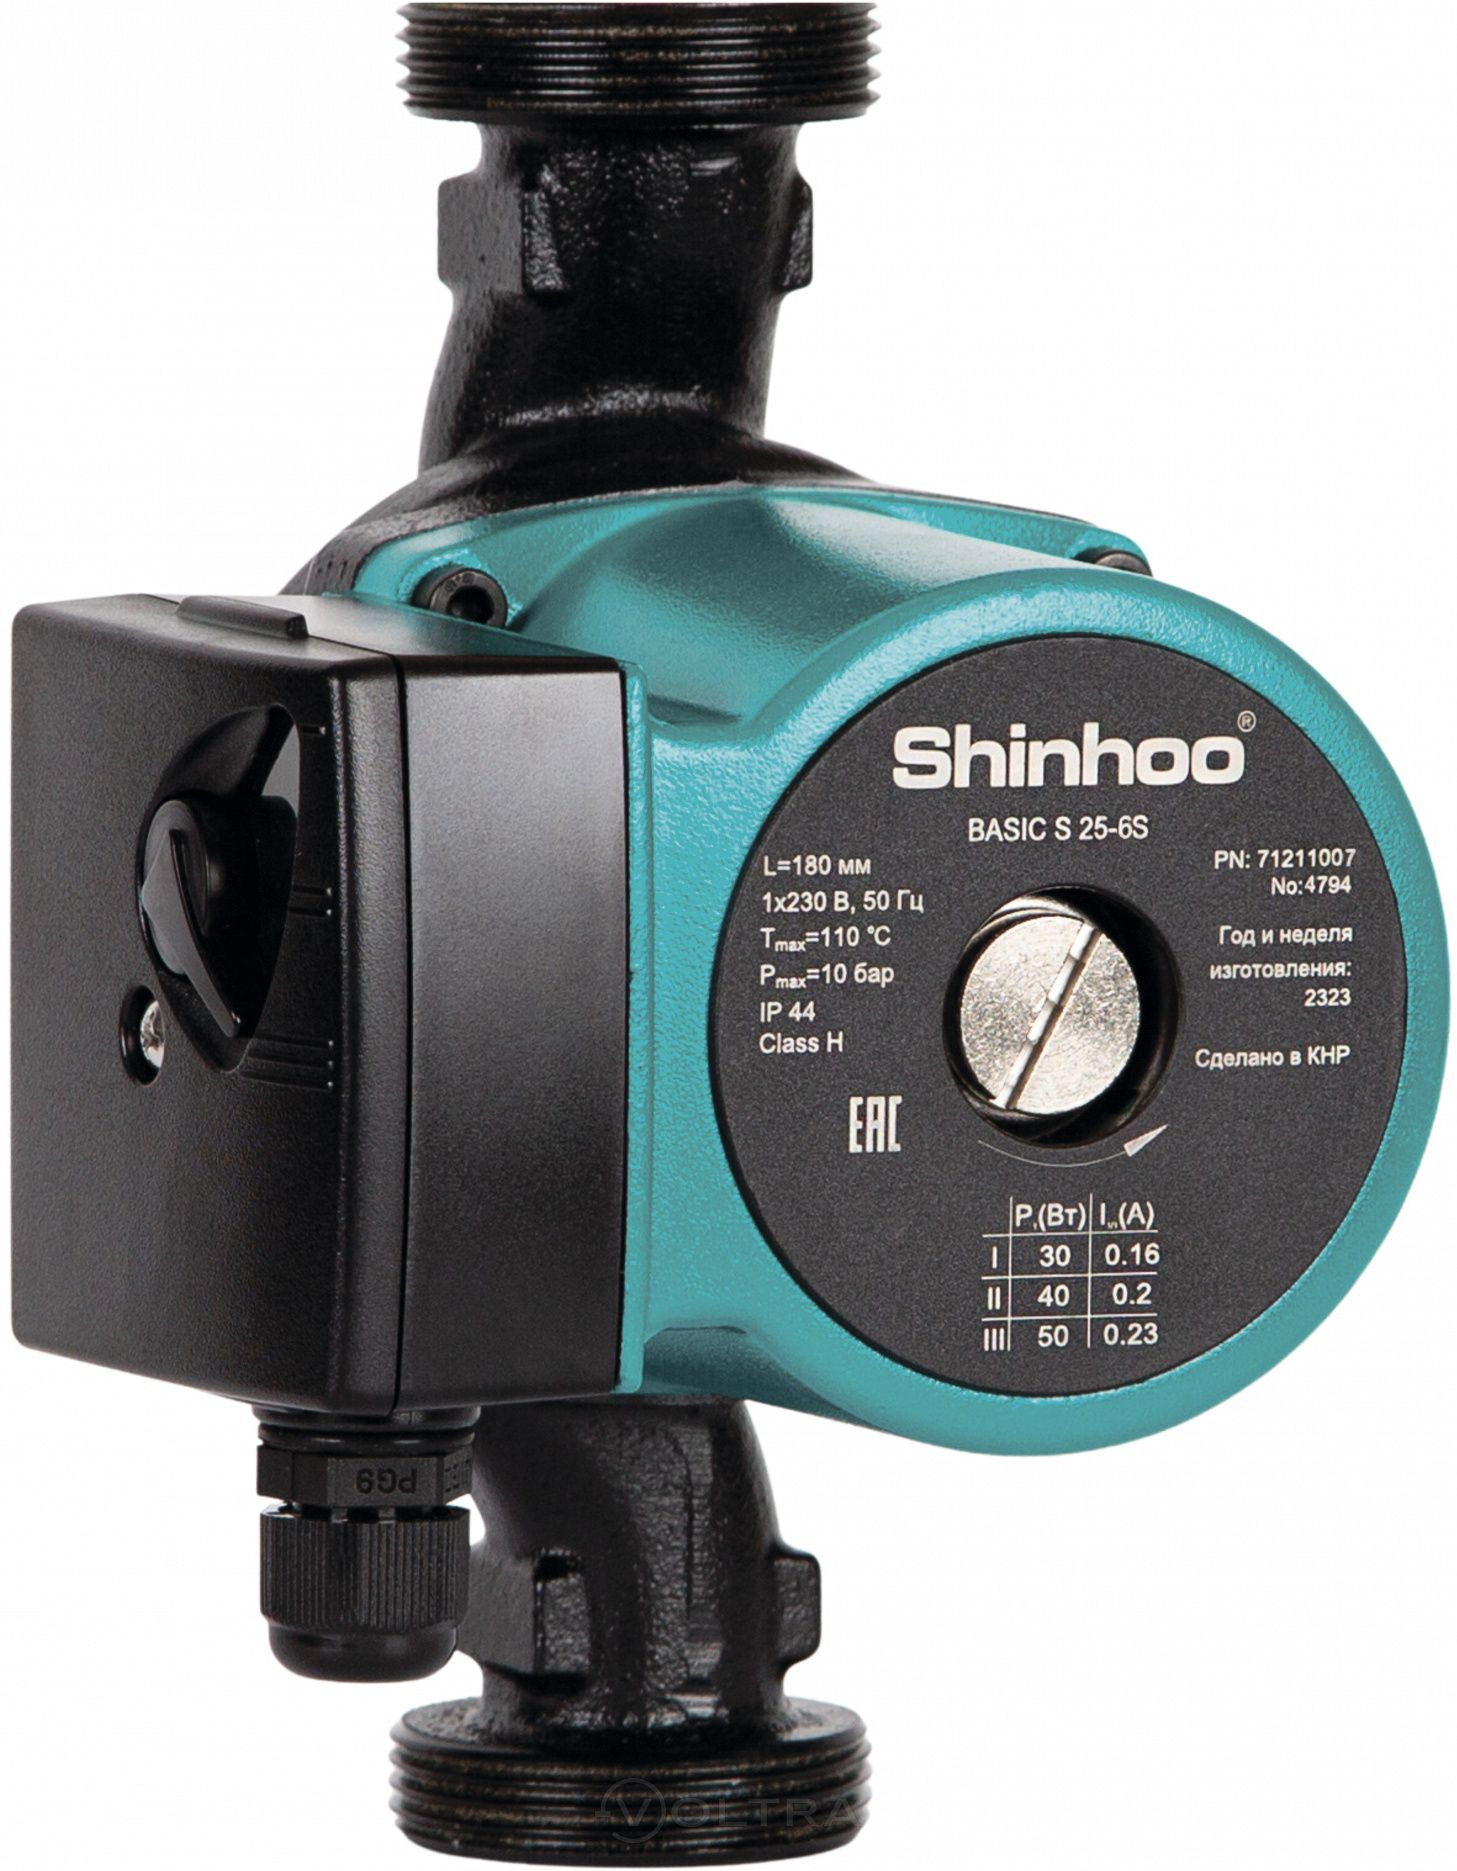 SHINHOO BASIC S 32-6S 180